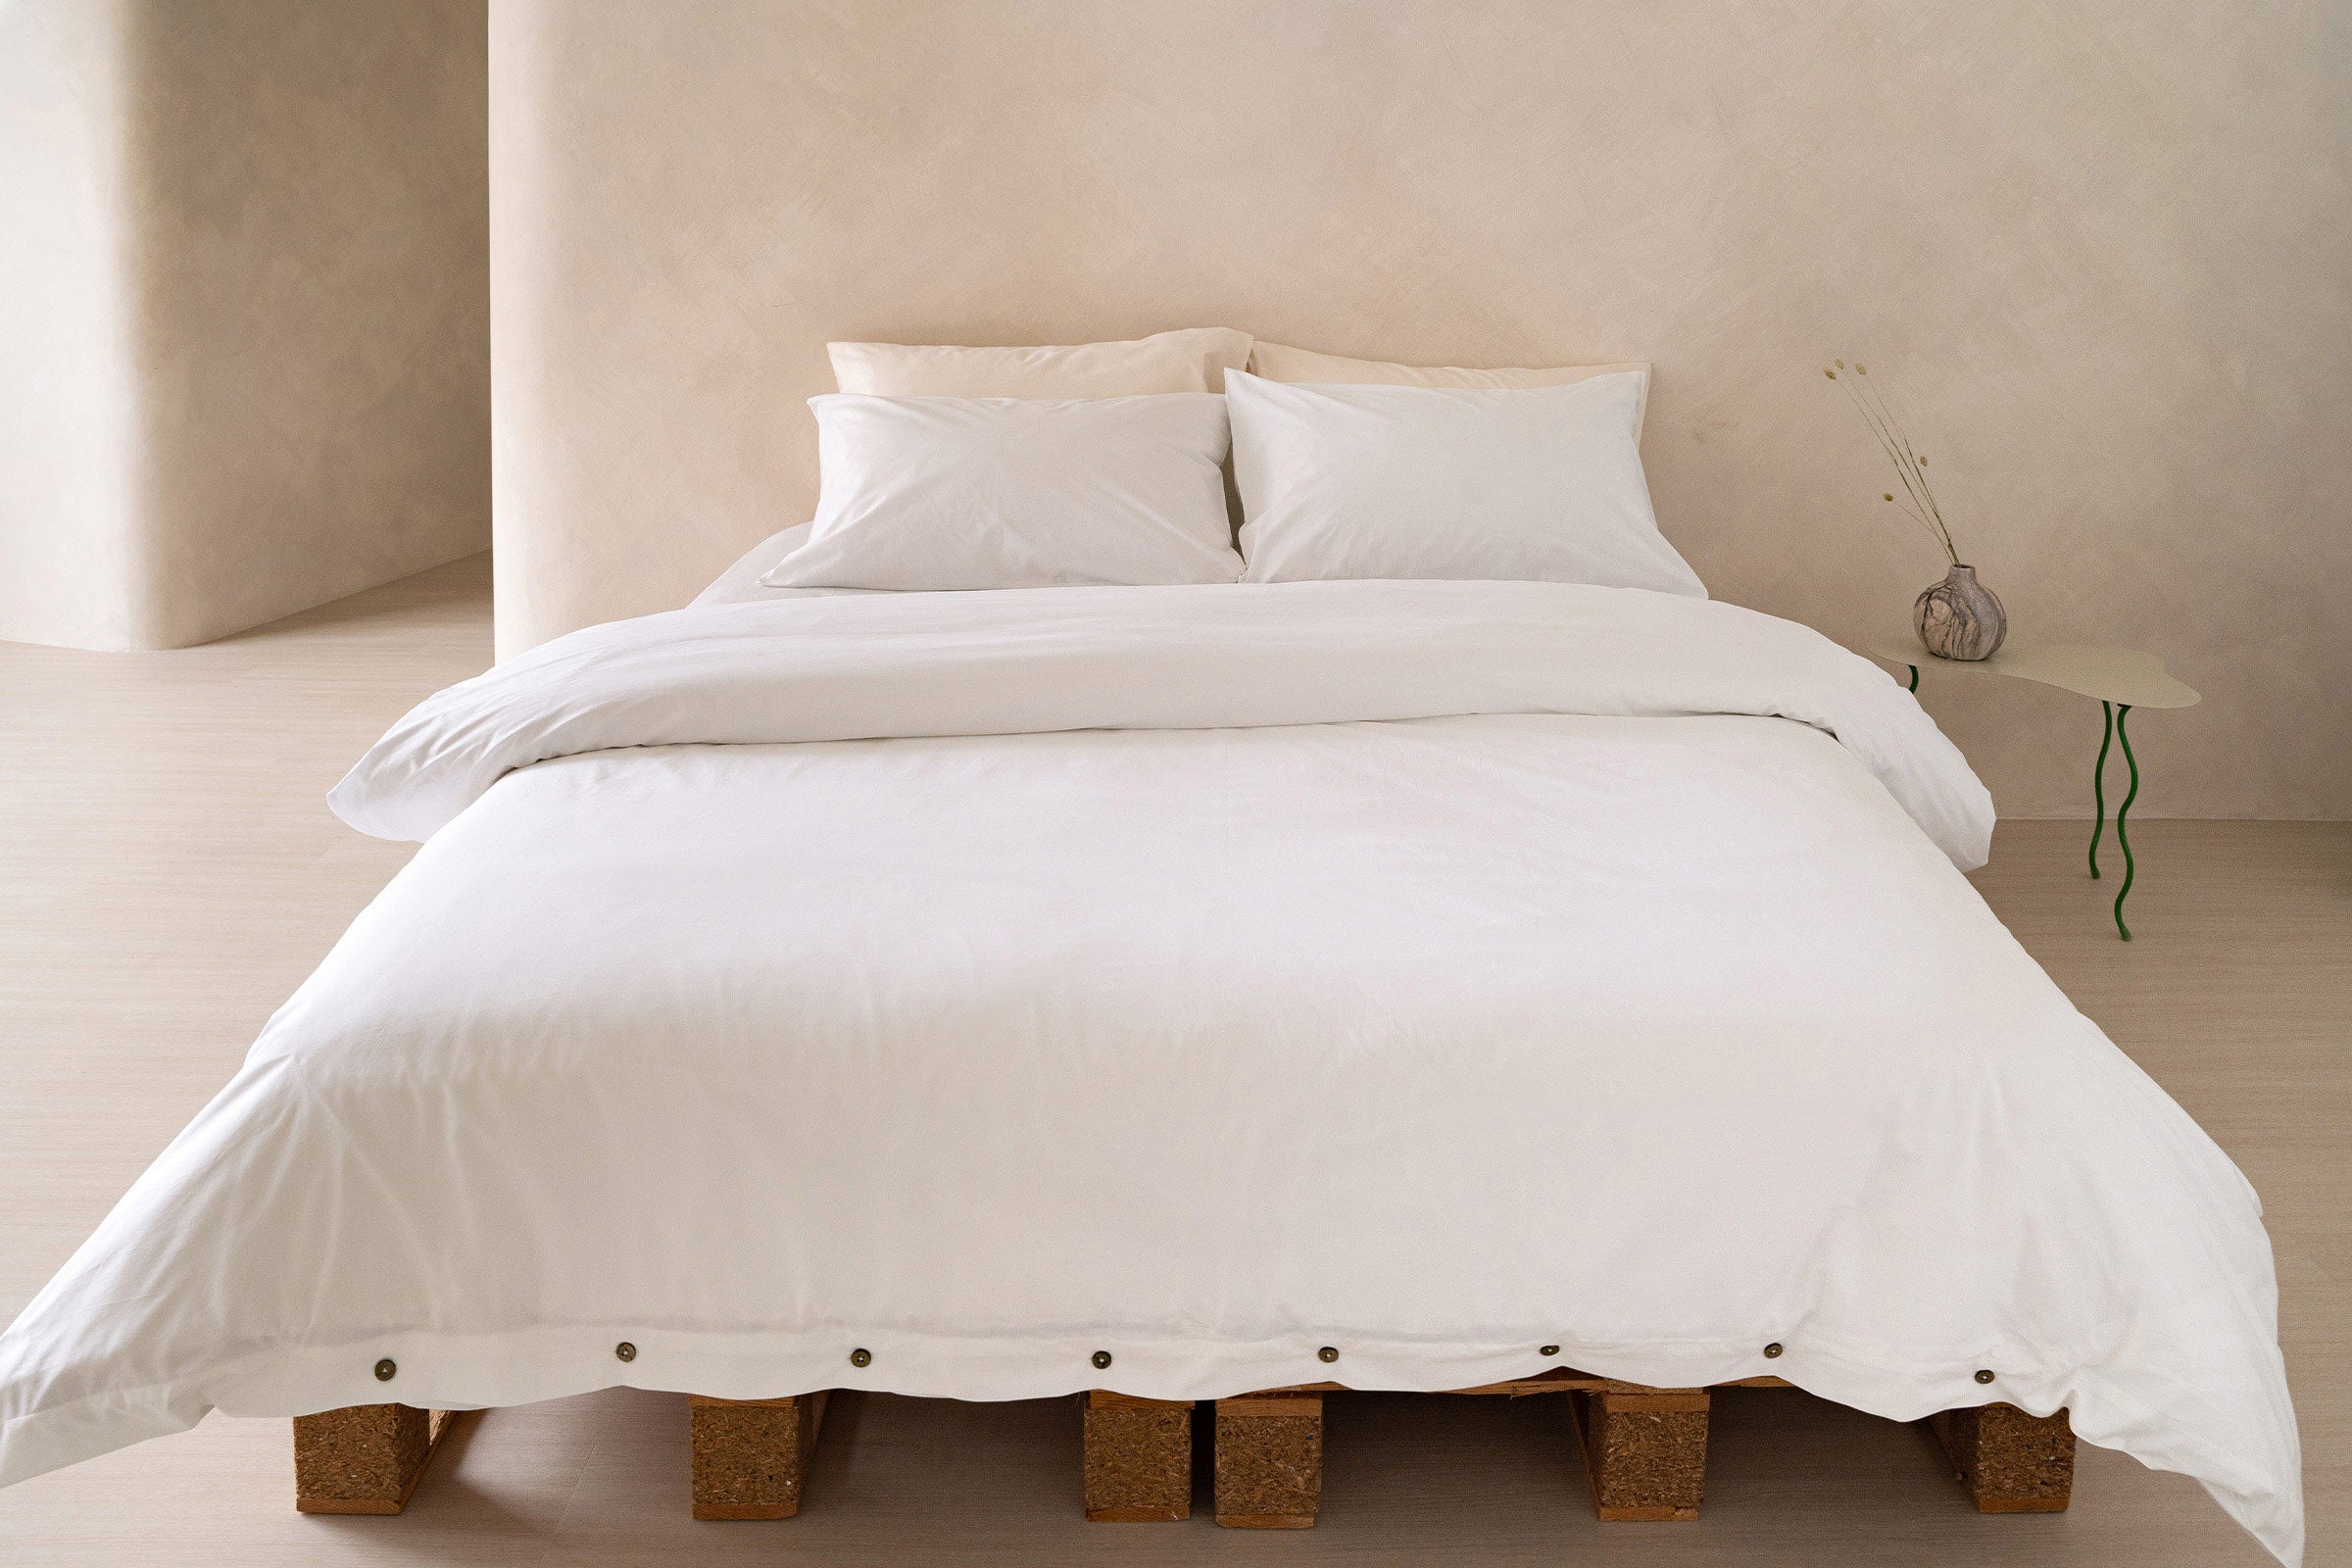 crisp-white-duvet-cover-fitted-sheet-pillowcase-pair-natural-pillowcase-pair-by-sojao.jpg